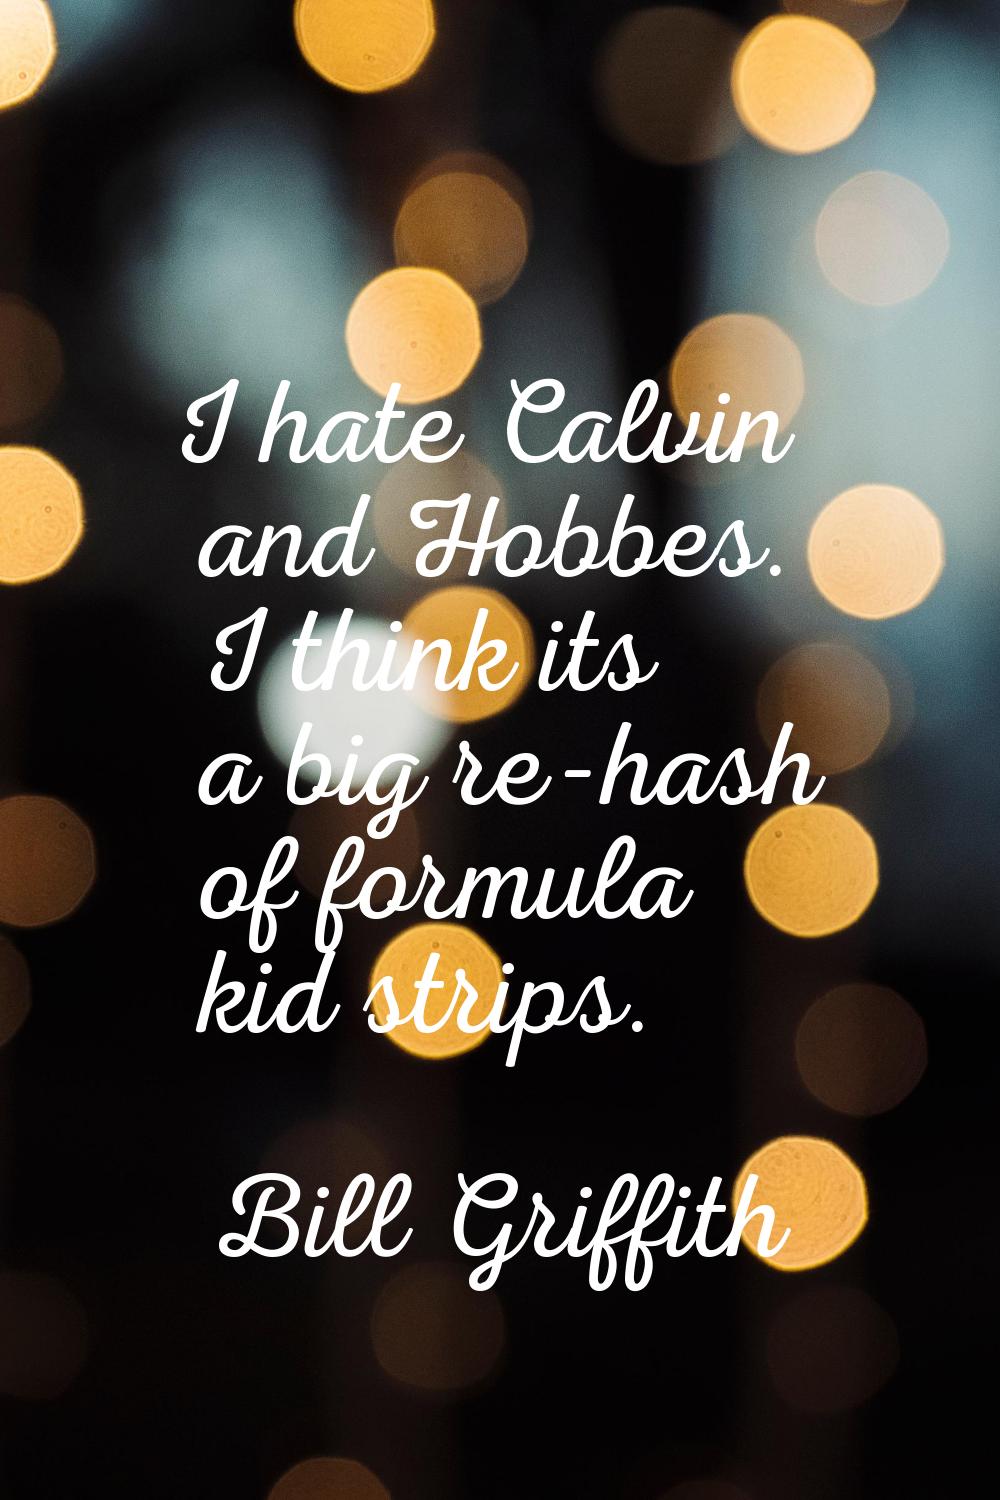 I hate Calvin and Hobbes. I think its a big re-hash of formula kid strips.